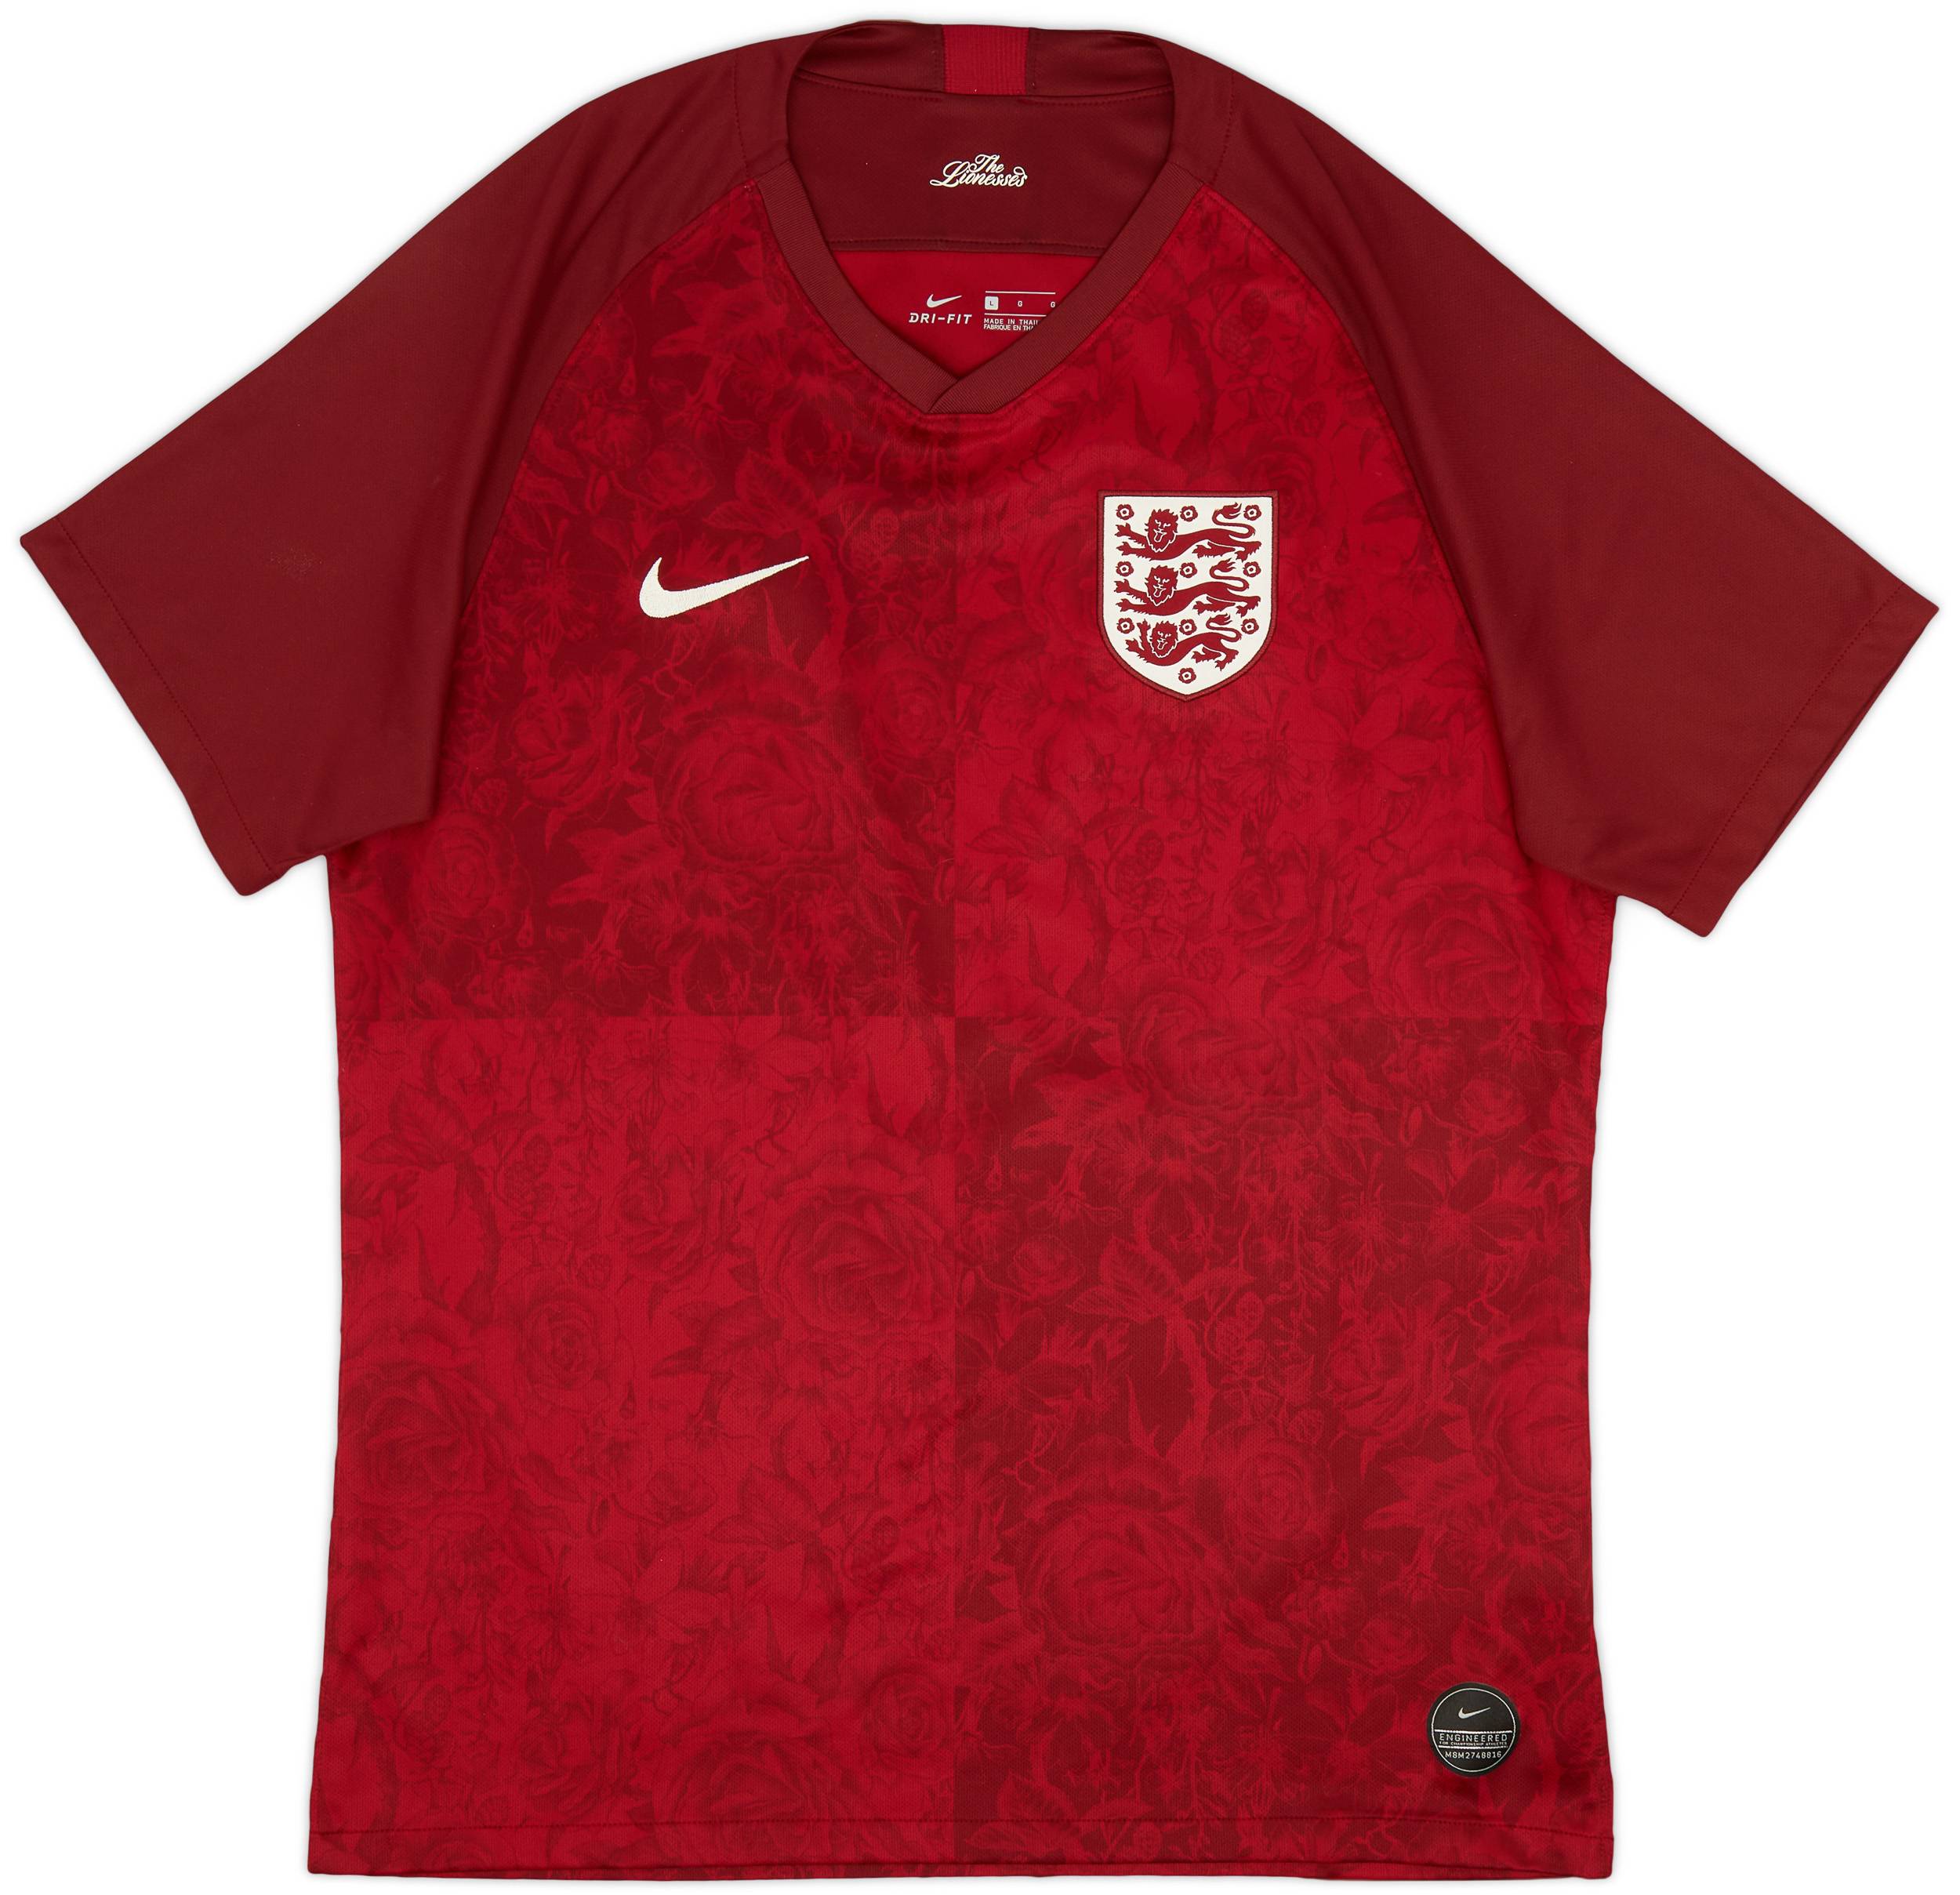 2019 England Lionesses Away Shirt - 9/10 - (Men's L)